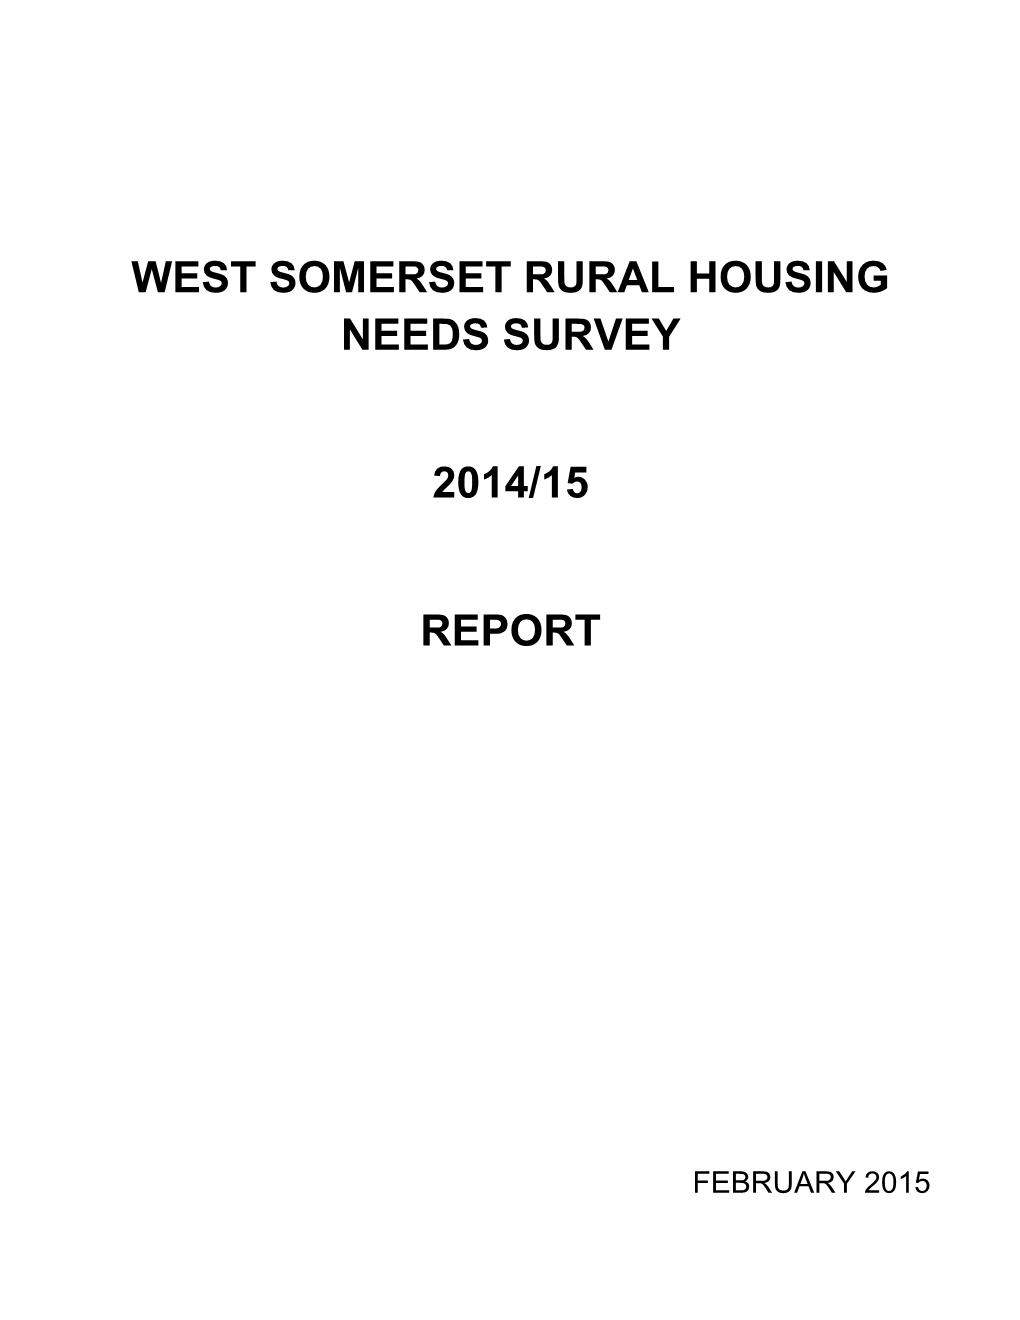 Rural Housing Need Report